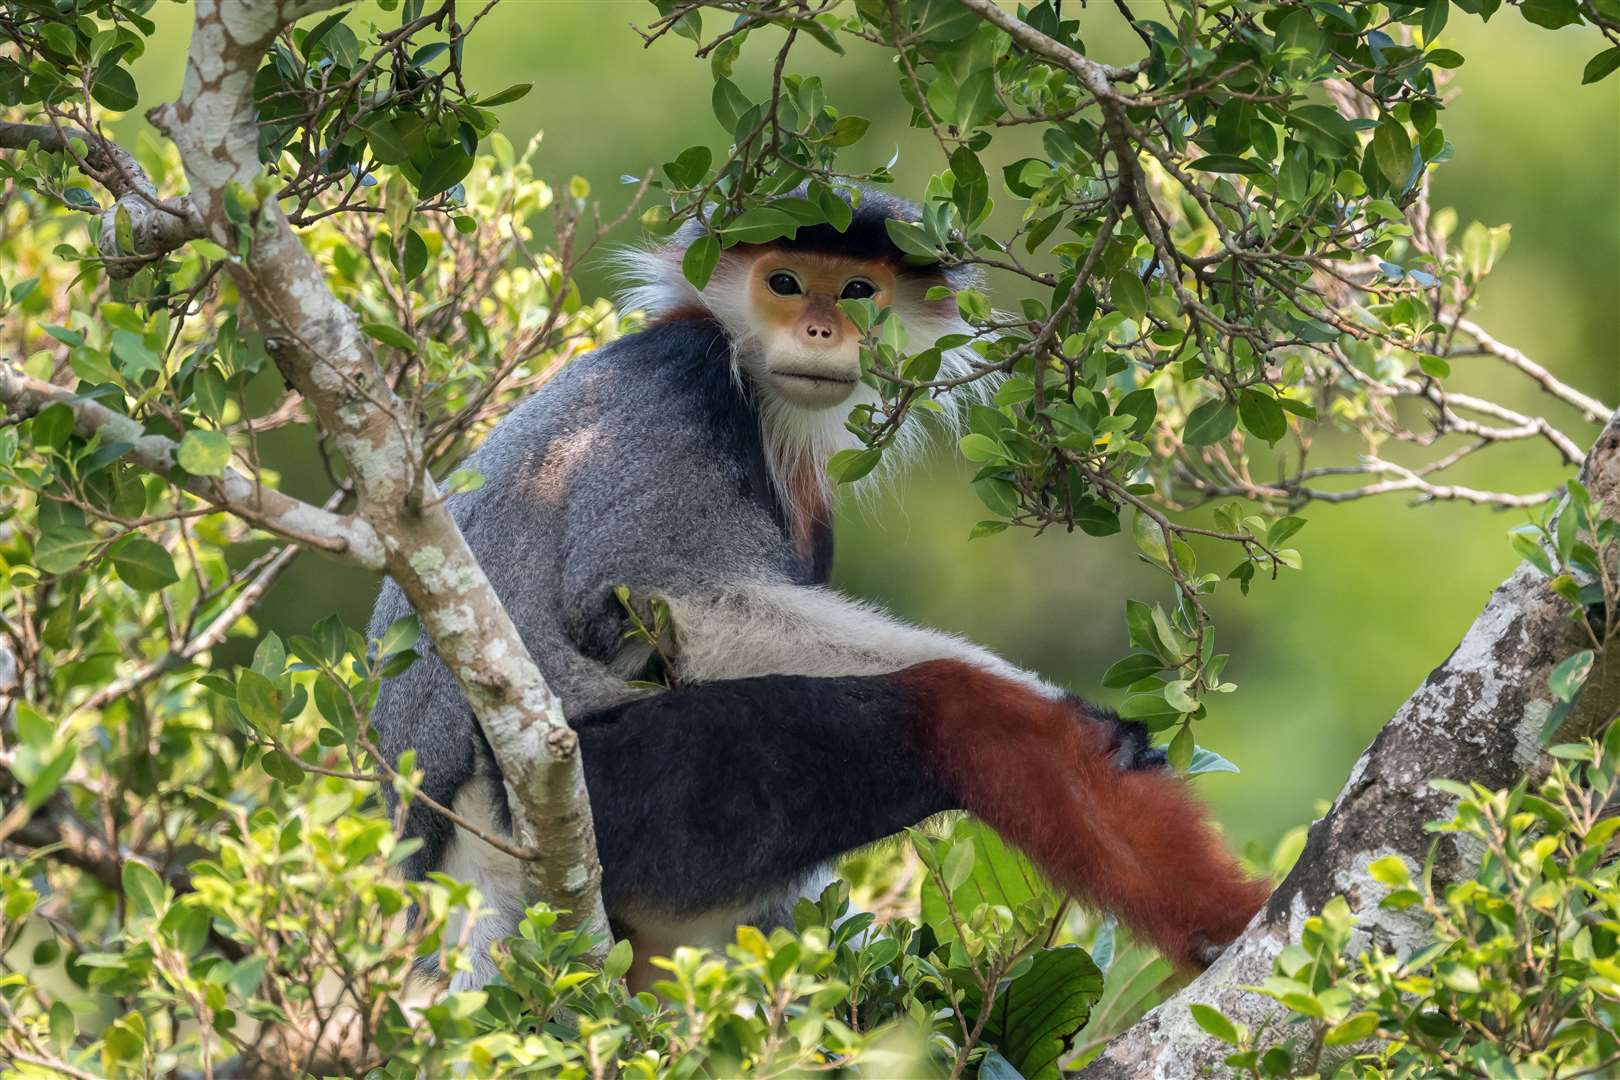 Treetop douc by Arshdeep Singh (Arshdeep Singh/Wildlife Photographer of the Year)